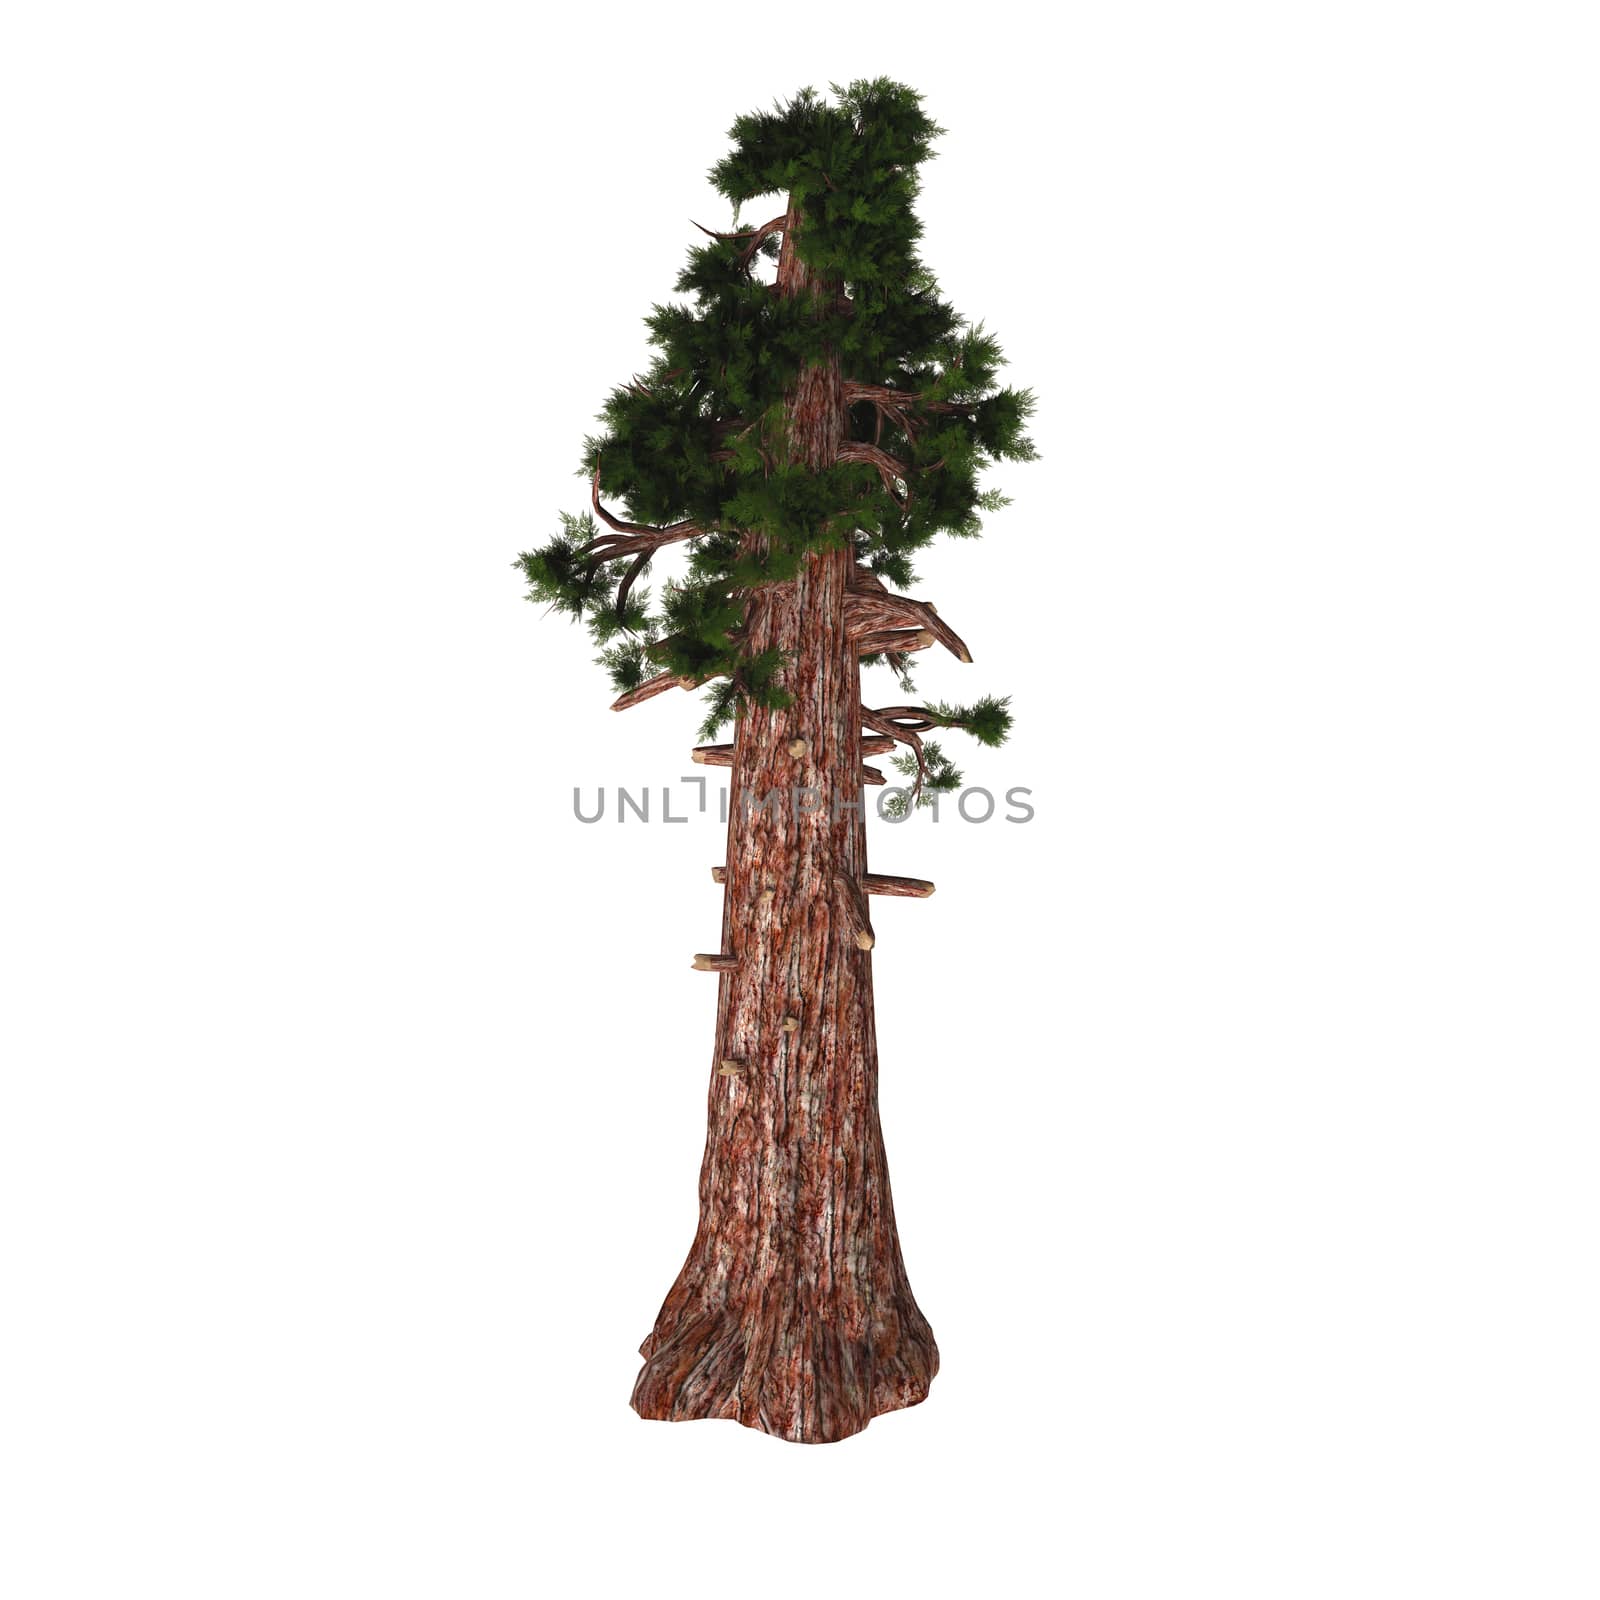 Giant Redwood Tree by Catmando